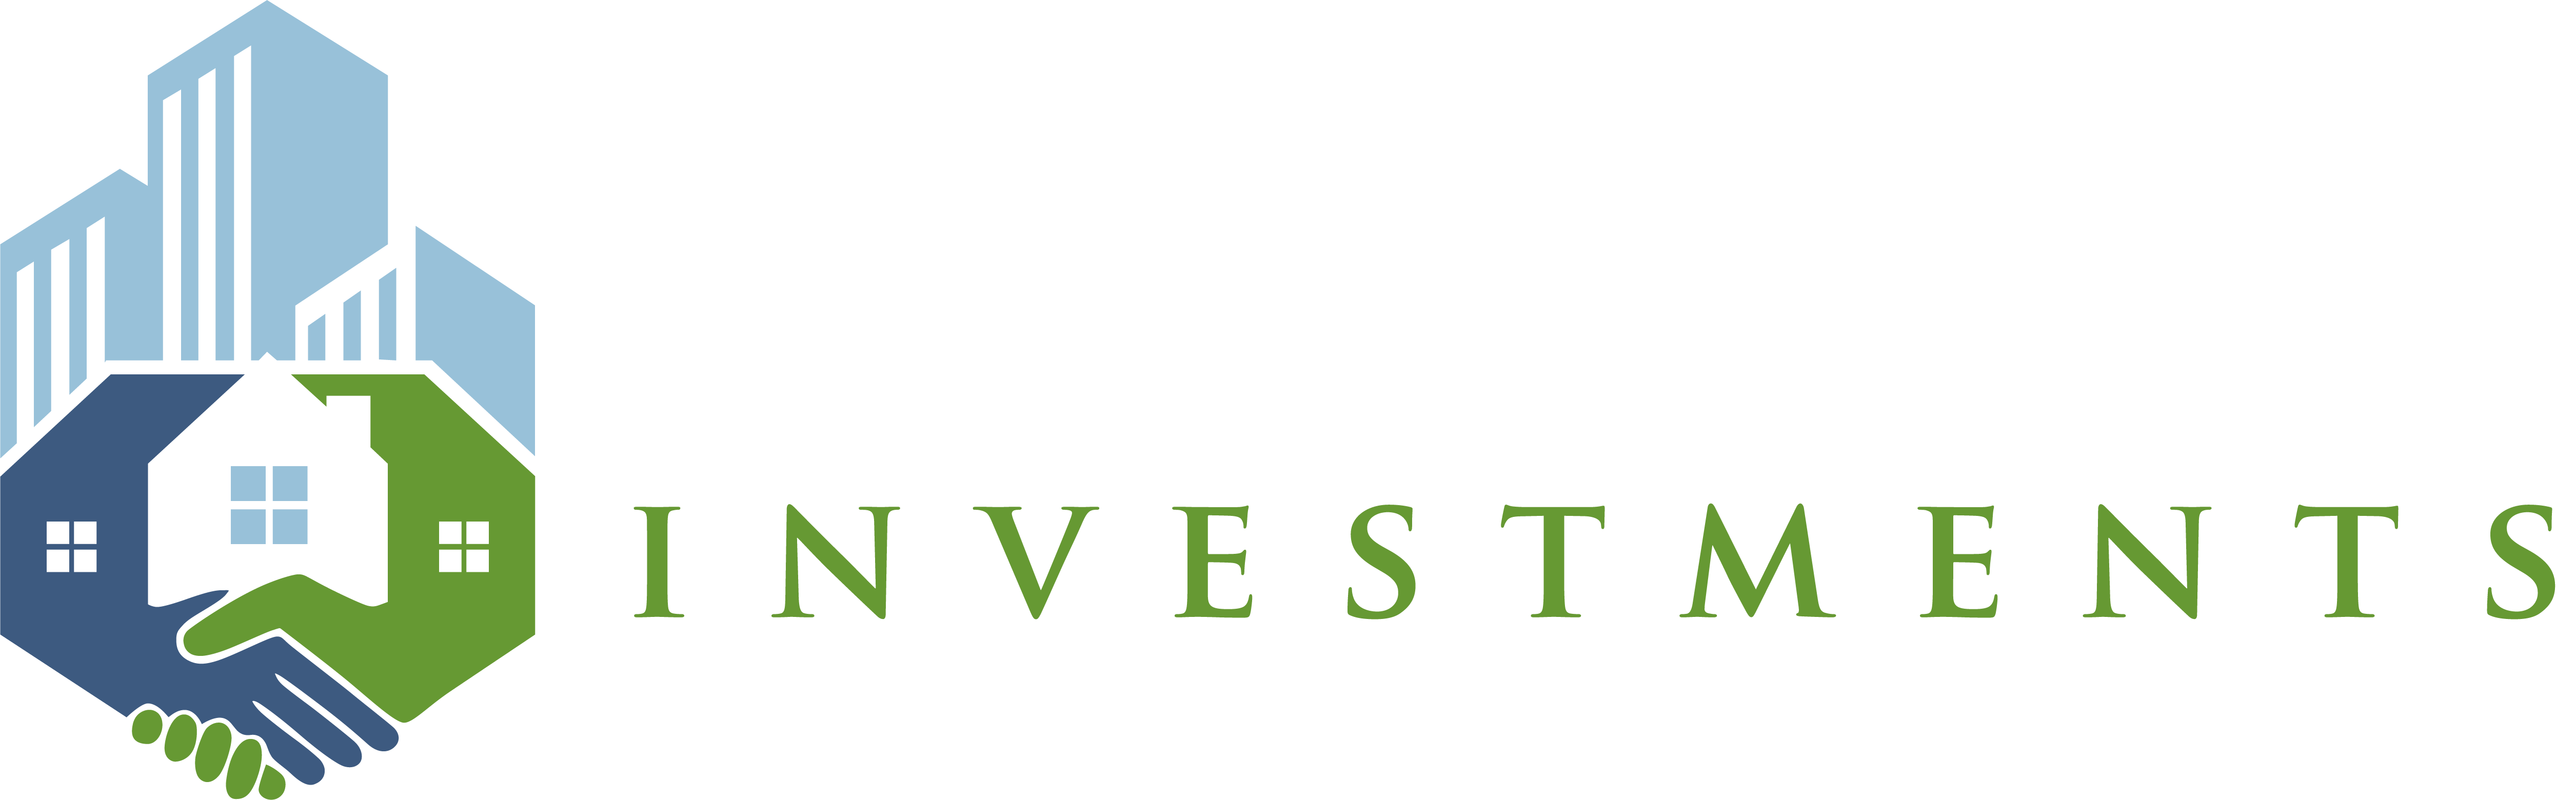 evergreen investments logo